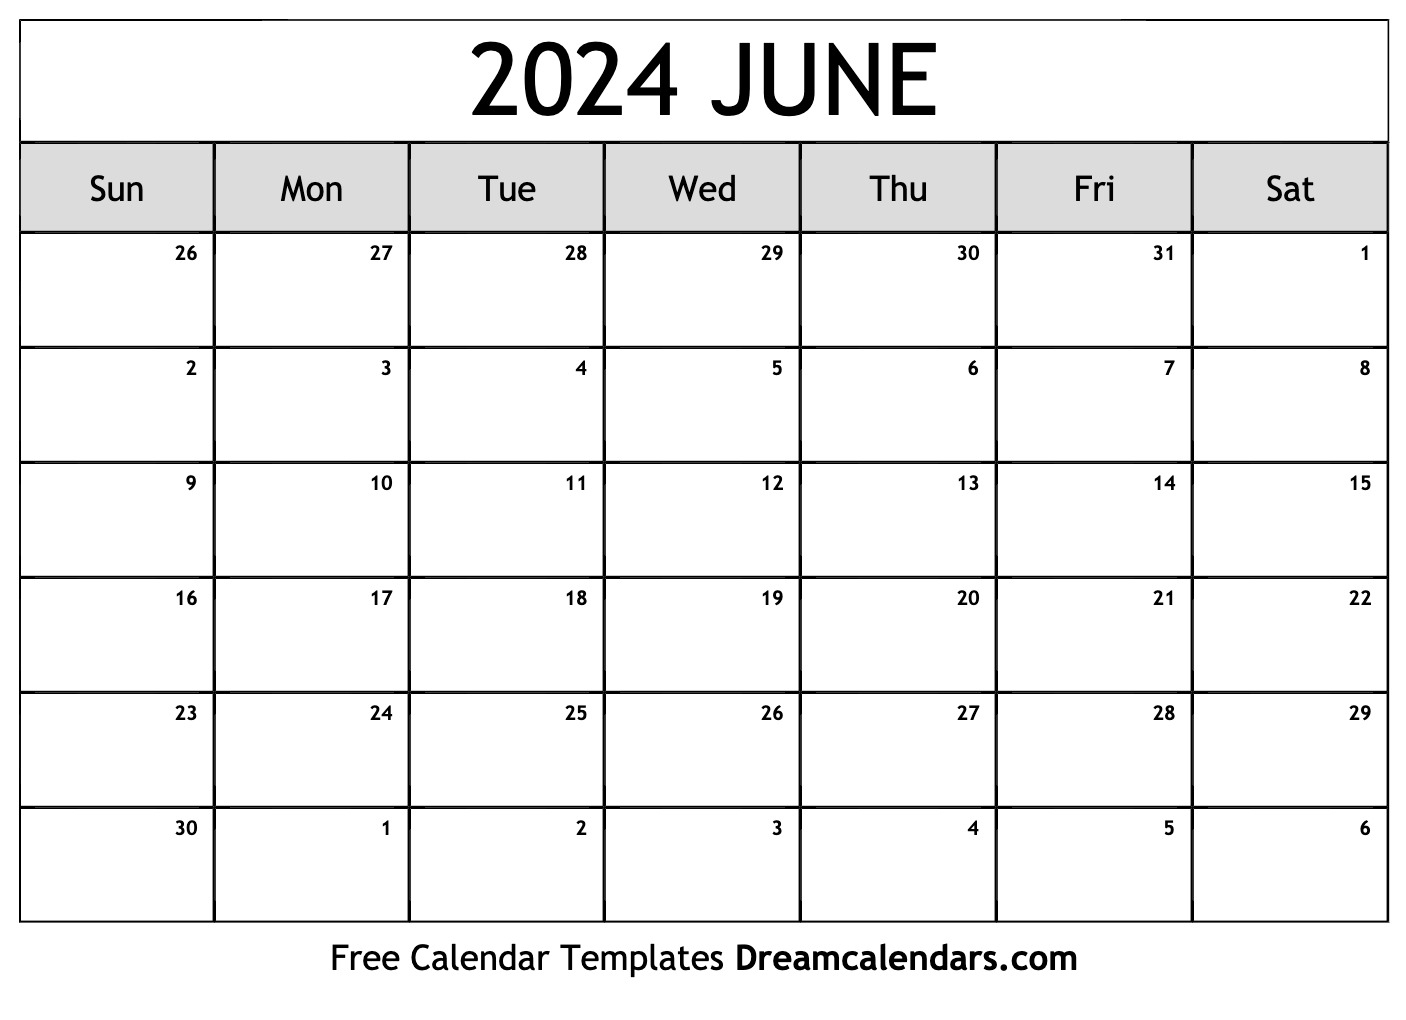 June 2024 Calendar | Free Blank Printable With Holidays for Calendar 2024 Printable Free June